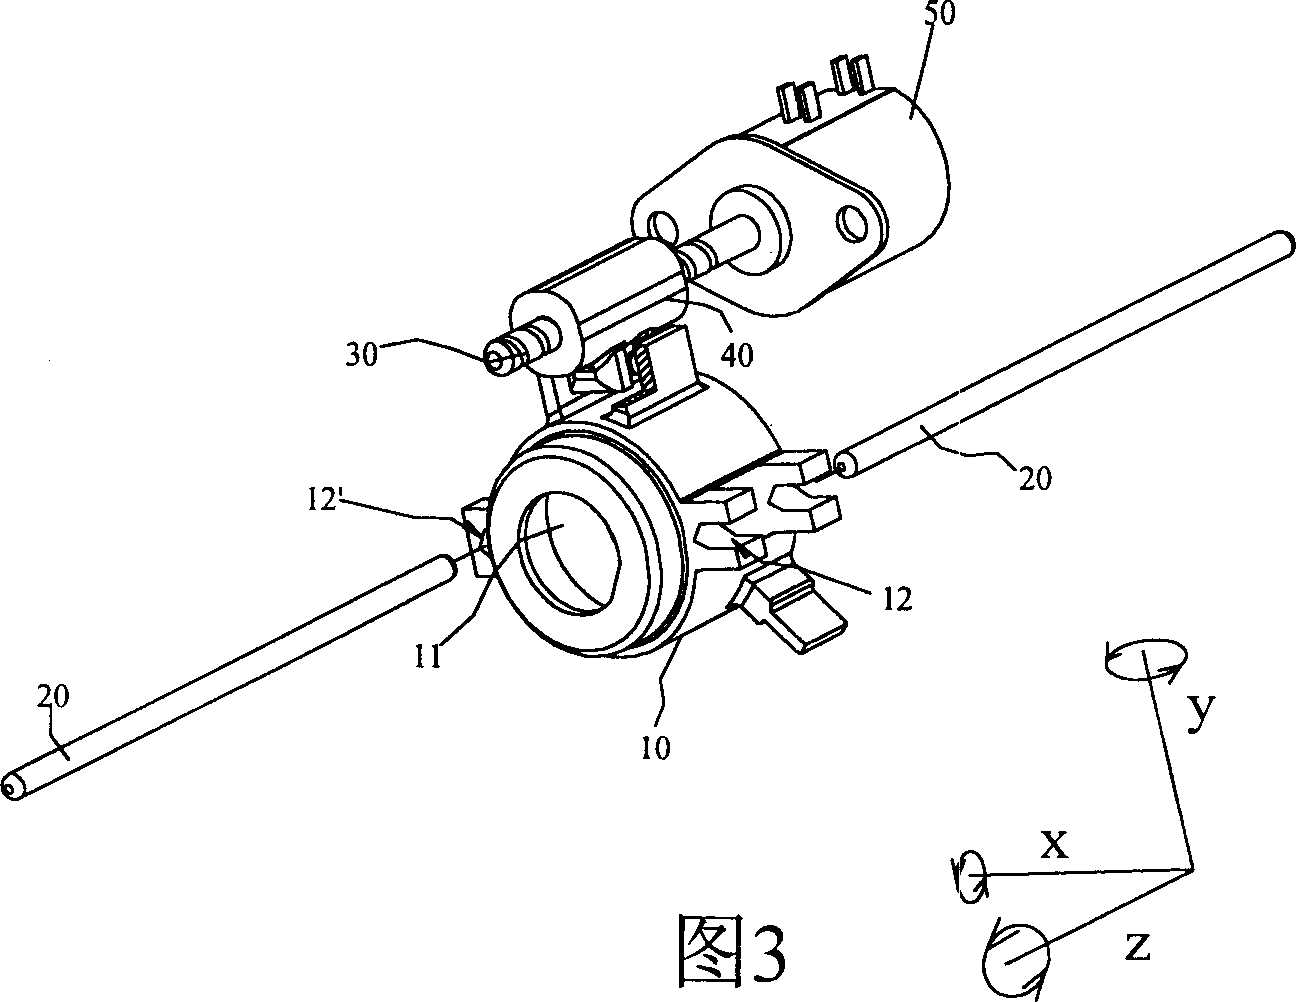 Adjustable lens group apparatus